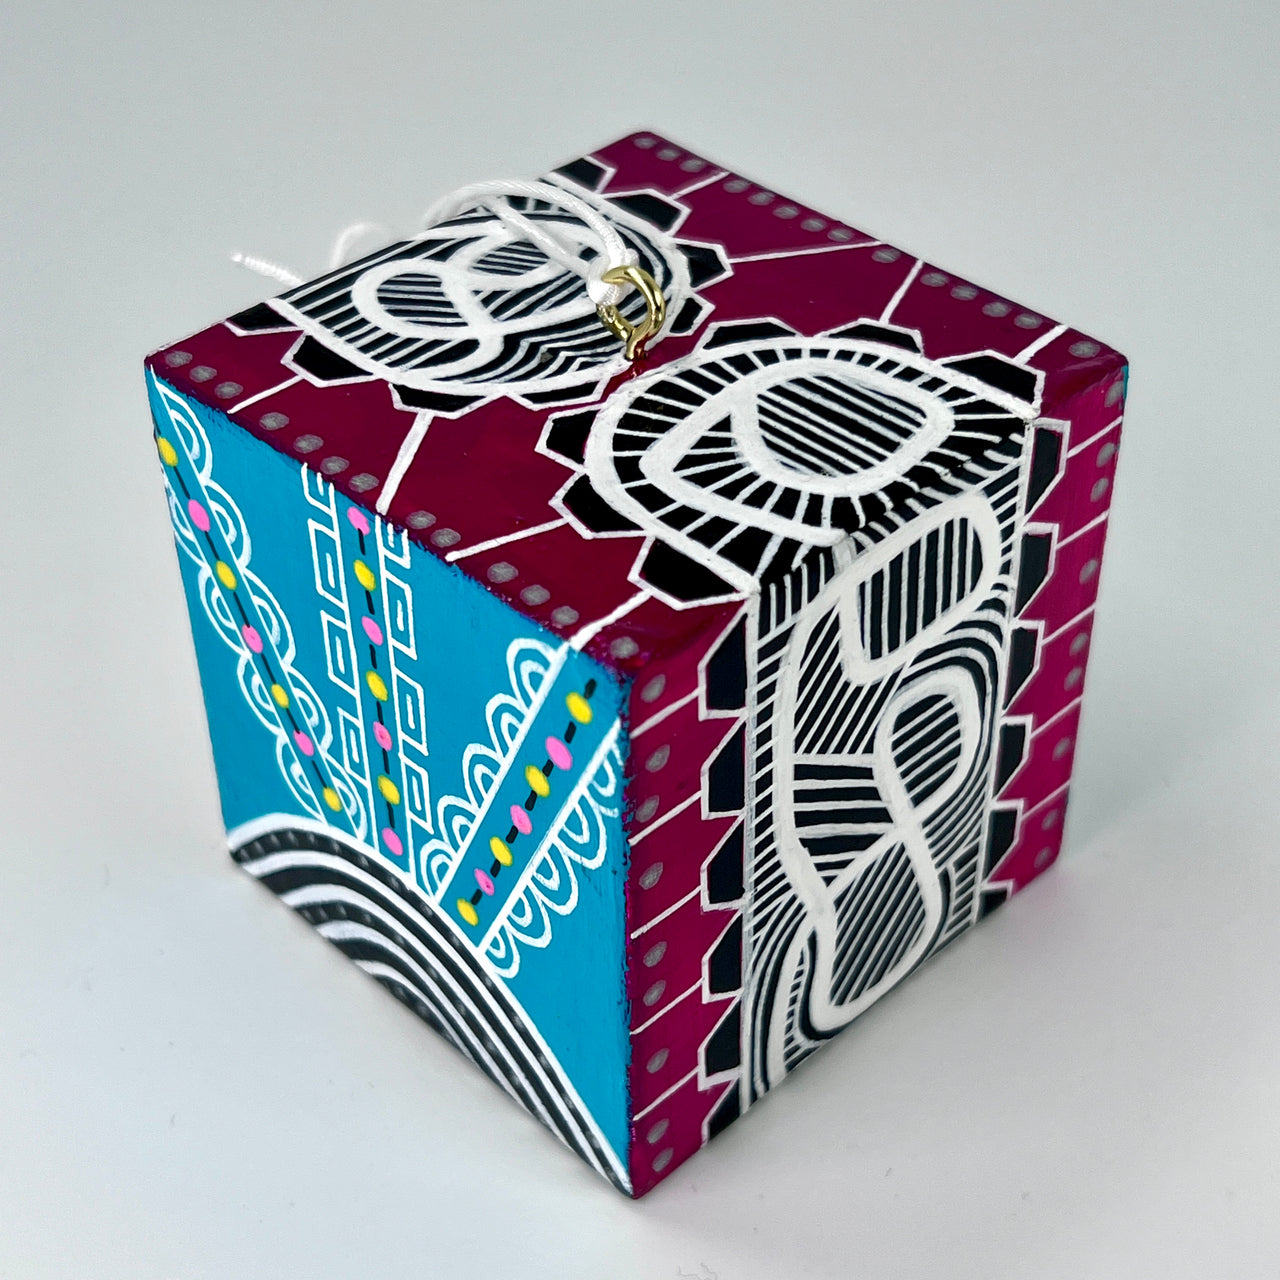 #23 - 3D Cube Art - 2.25" cube